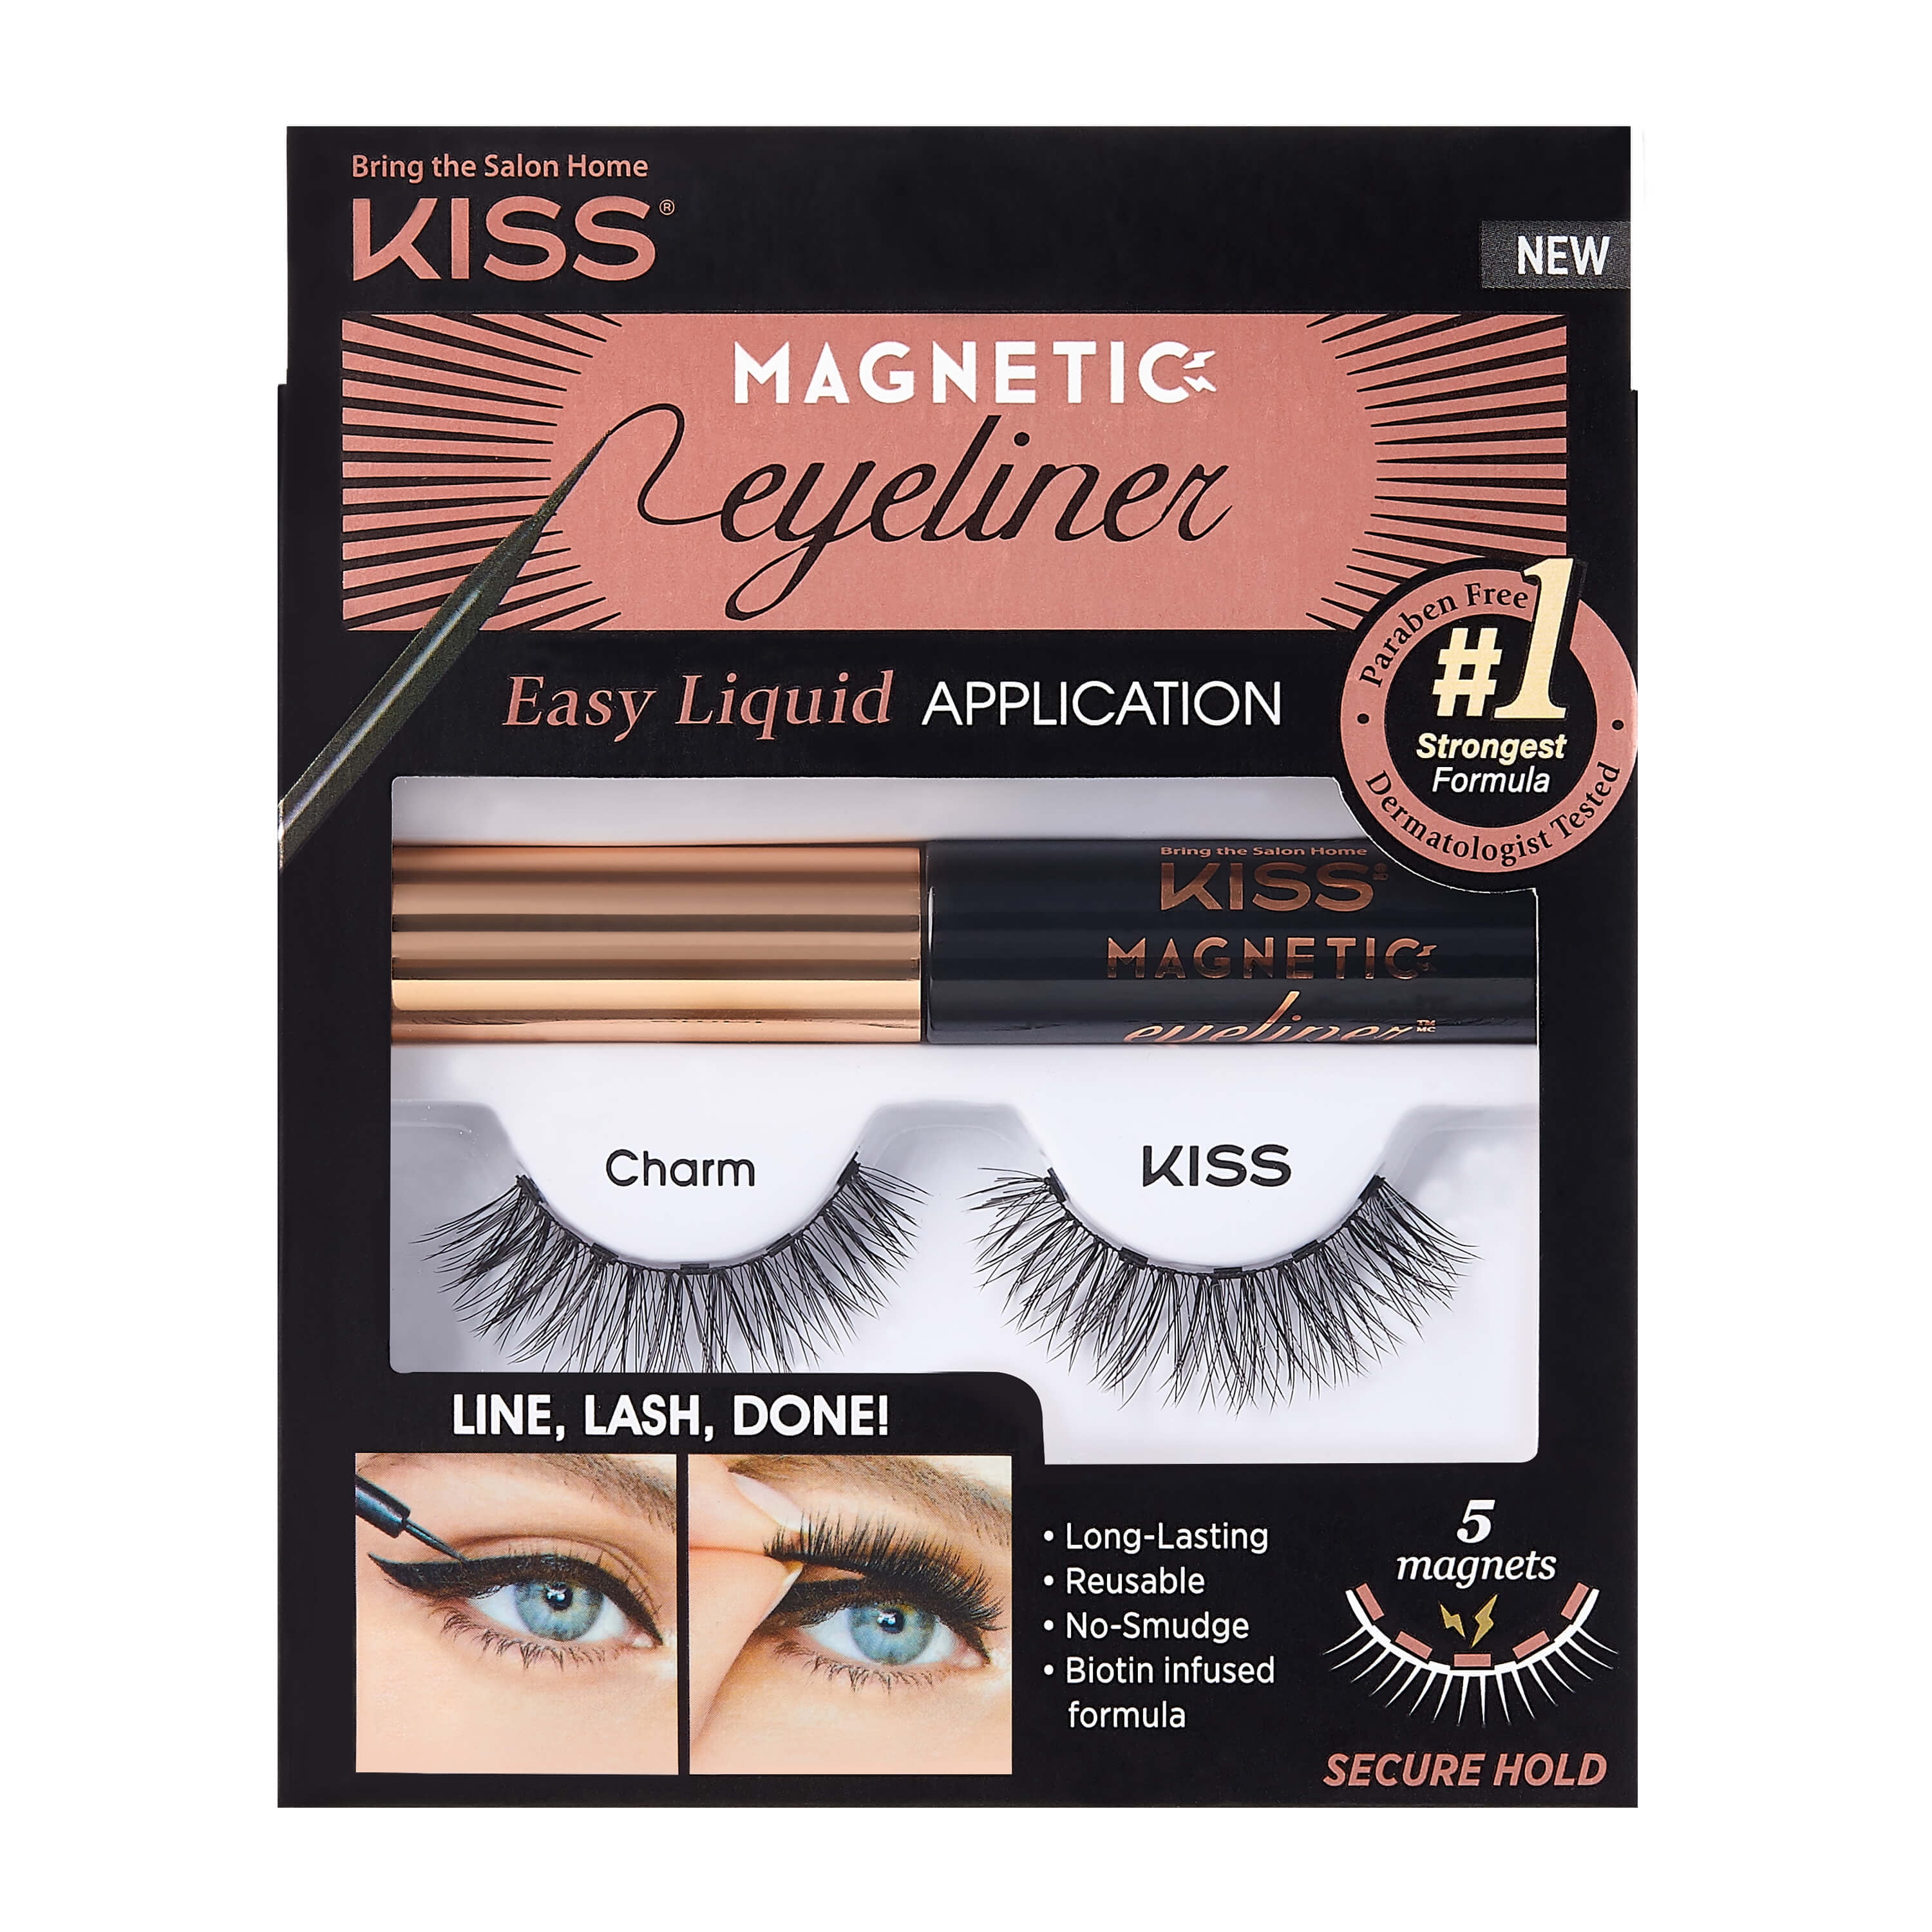 KISS Lash Couture Masterpiece Fake Eyelashes, 'Cruise', 1 Pair, Kiss False Lashes